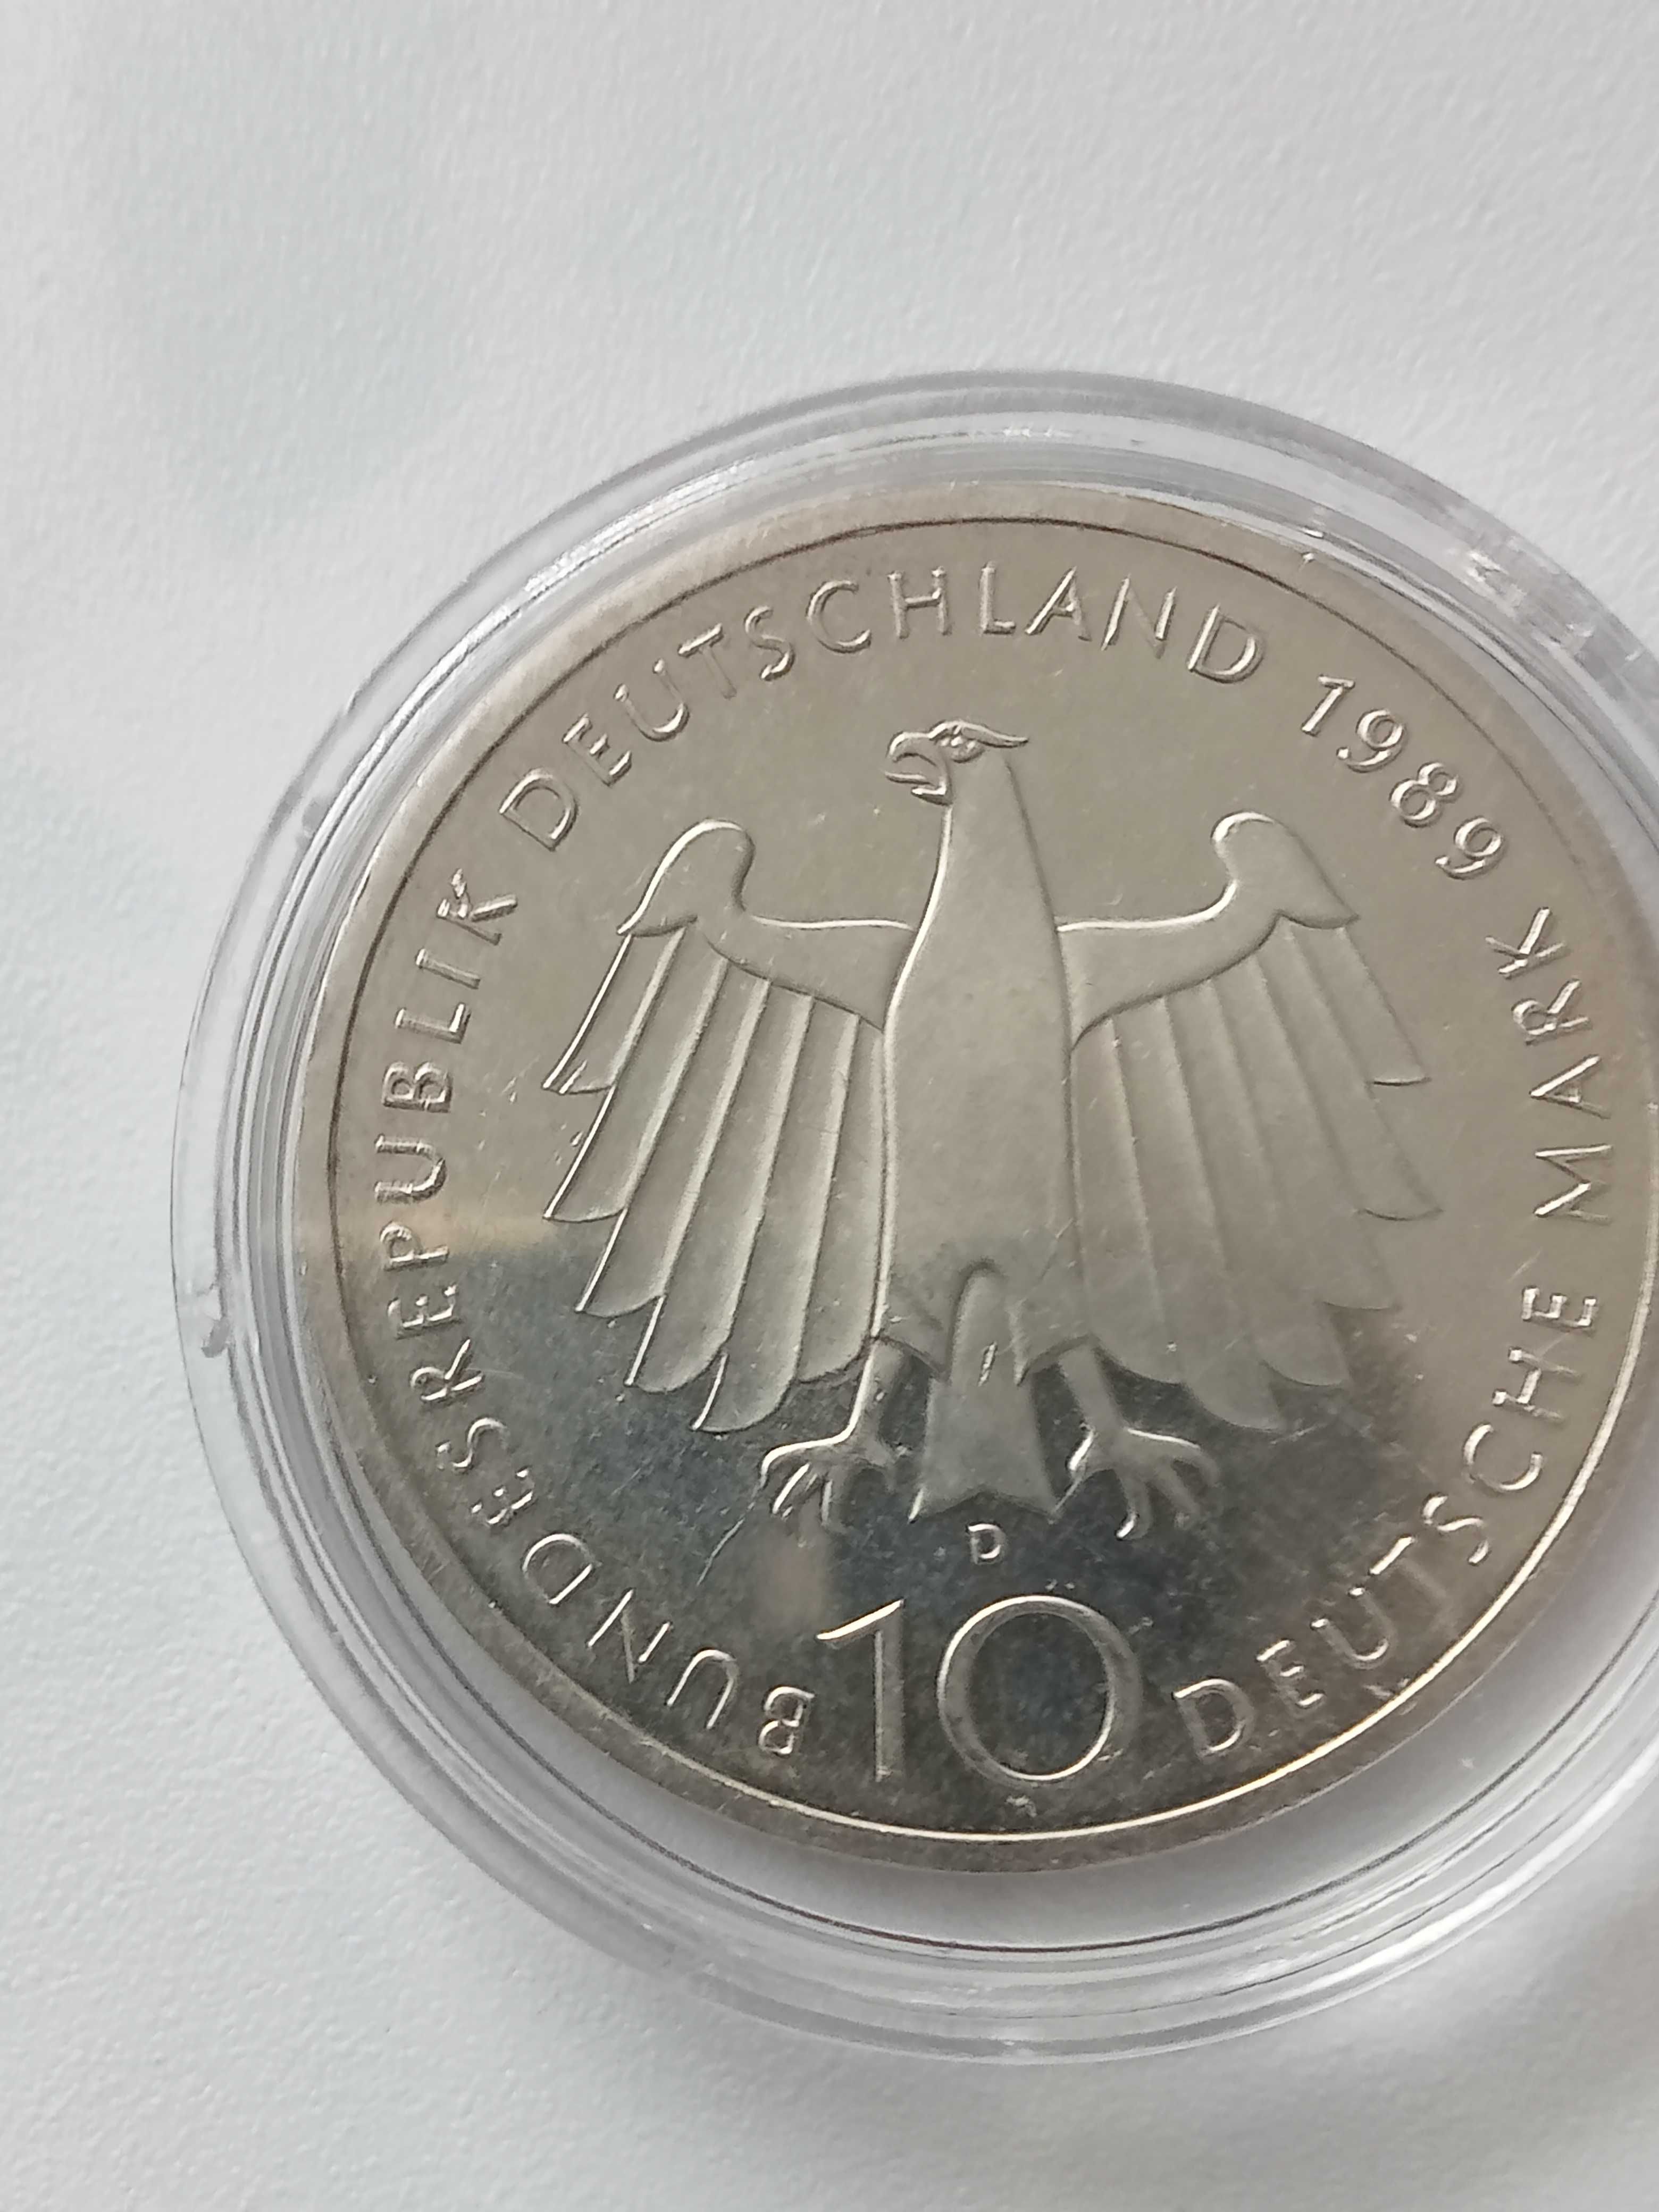 Moneta 10 marek Niemiecy 1989 r 2000 lat Bonn